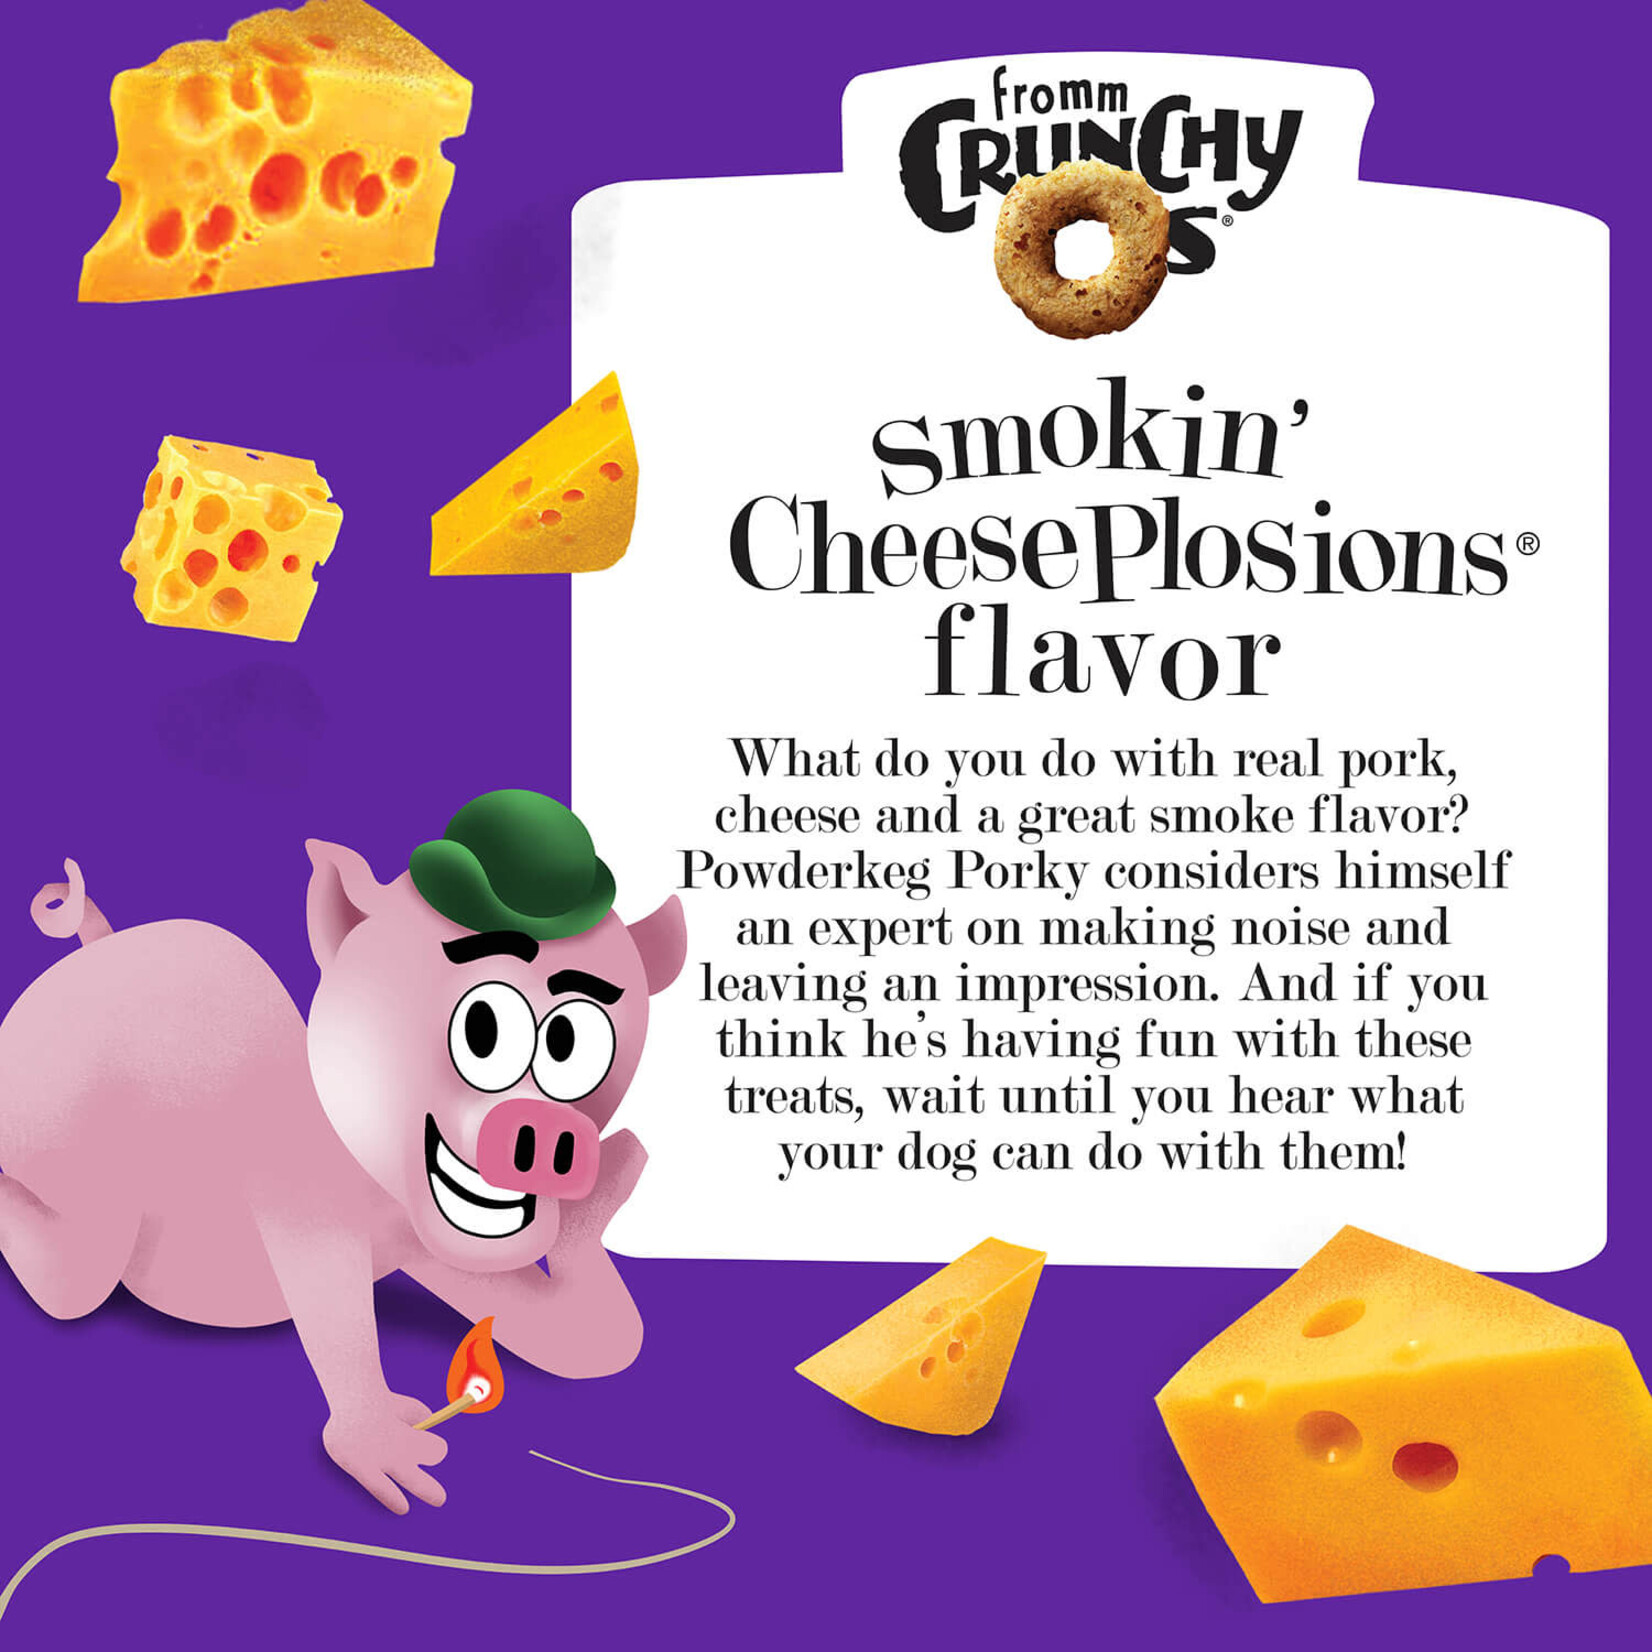 Fromm Crunchy Os Smokin' CheesePlosions Flavor Dog Treats